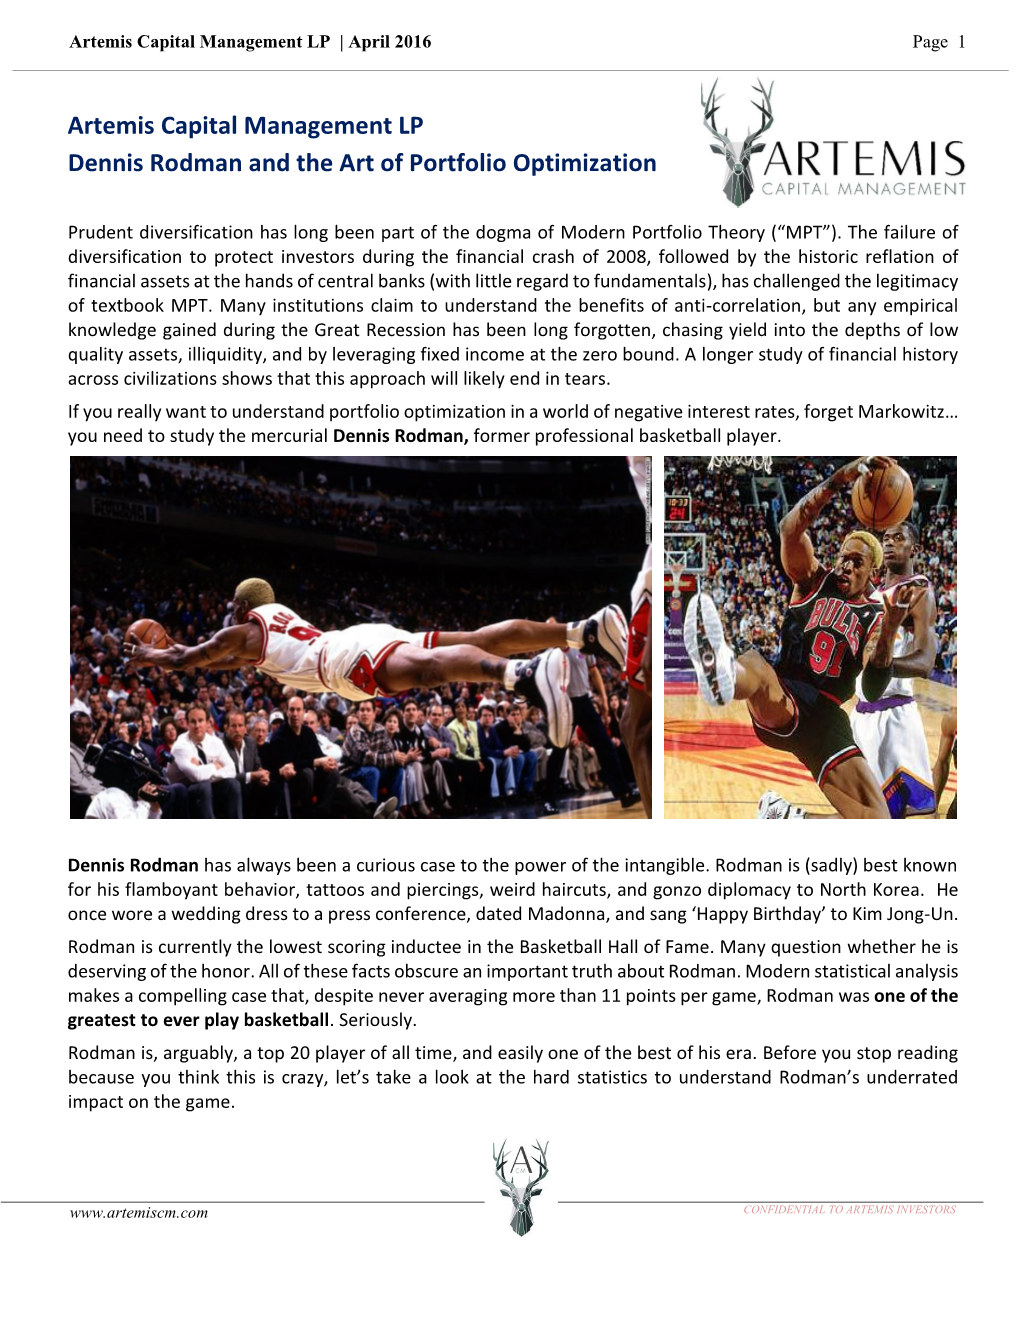 Artemis Capital Management LP Dennis Rodman and the Art of Portfolio Optimization